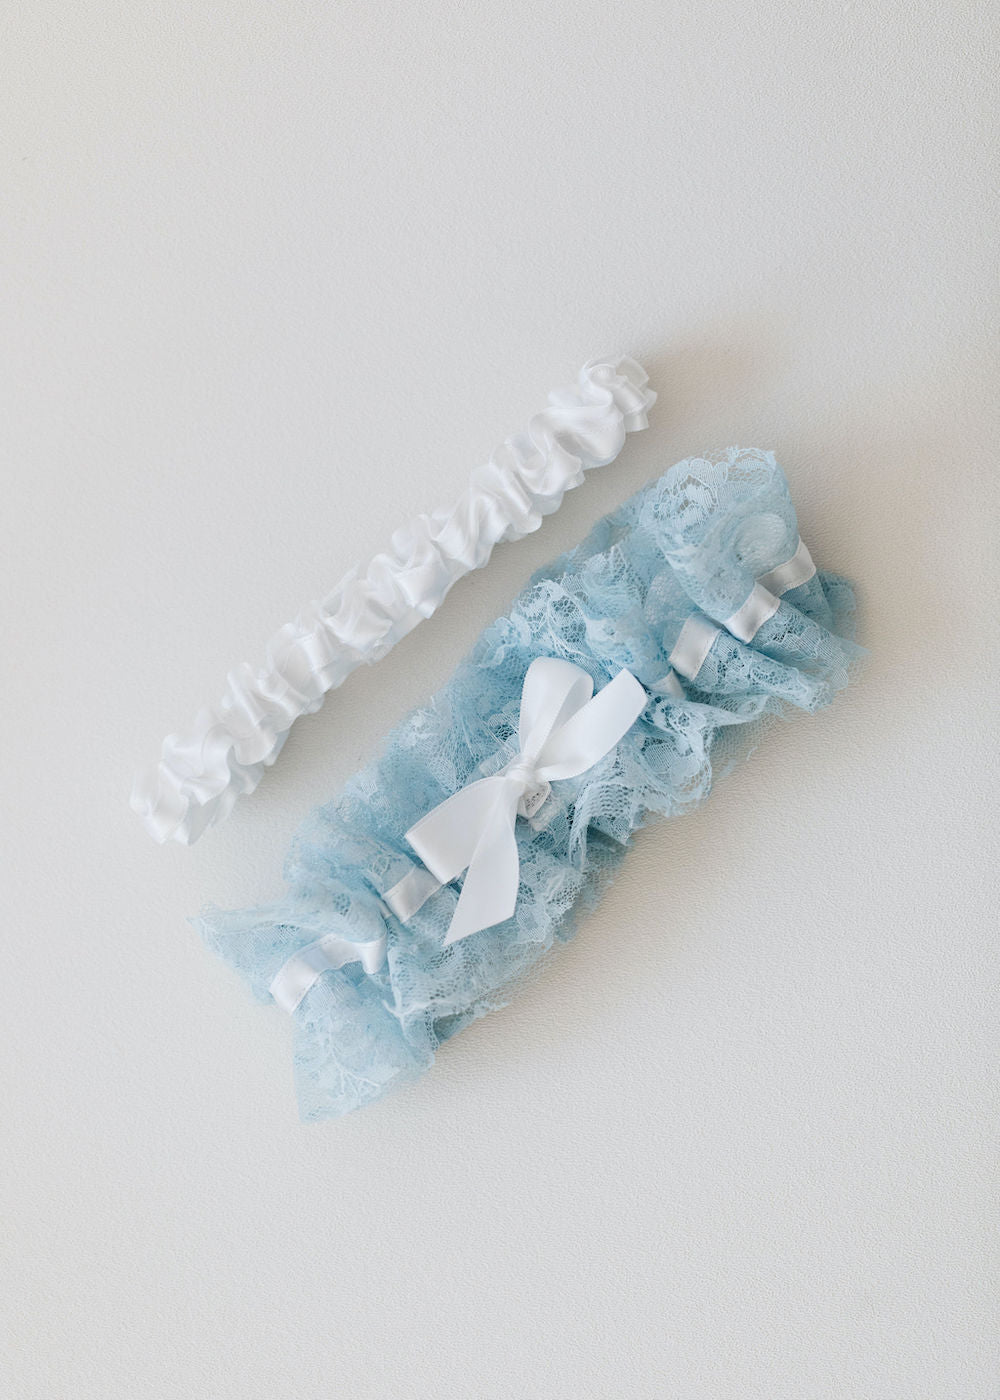 custom wedding garter set handmade with blue lace and white satin by expert bridal accessory designer, The Garter Girl